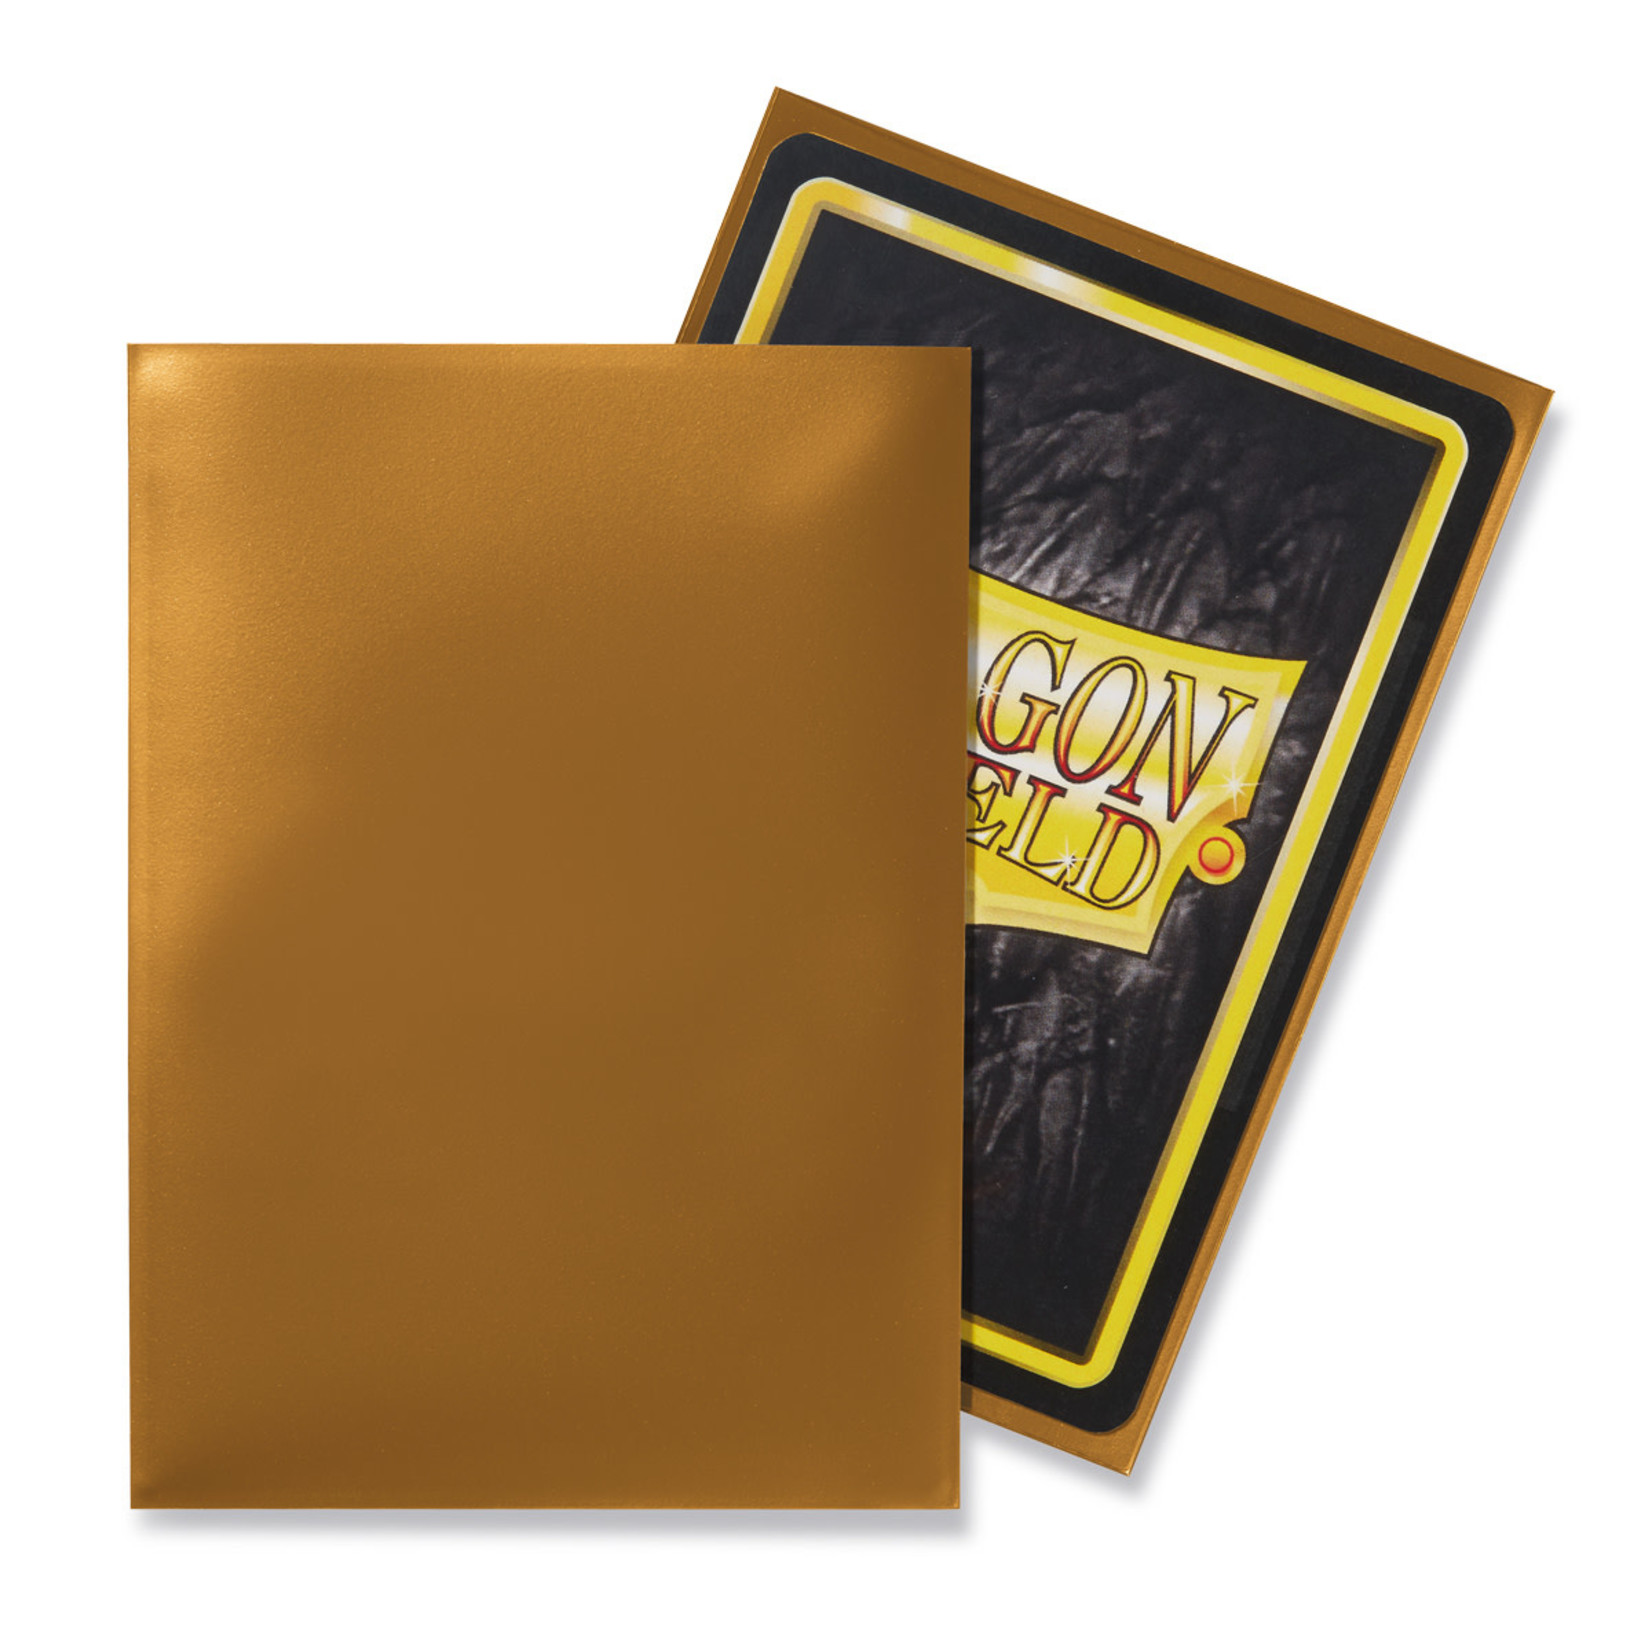 Arcane Tinmen Dragon Shield Standard Sleeves - Classic Gold (100)